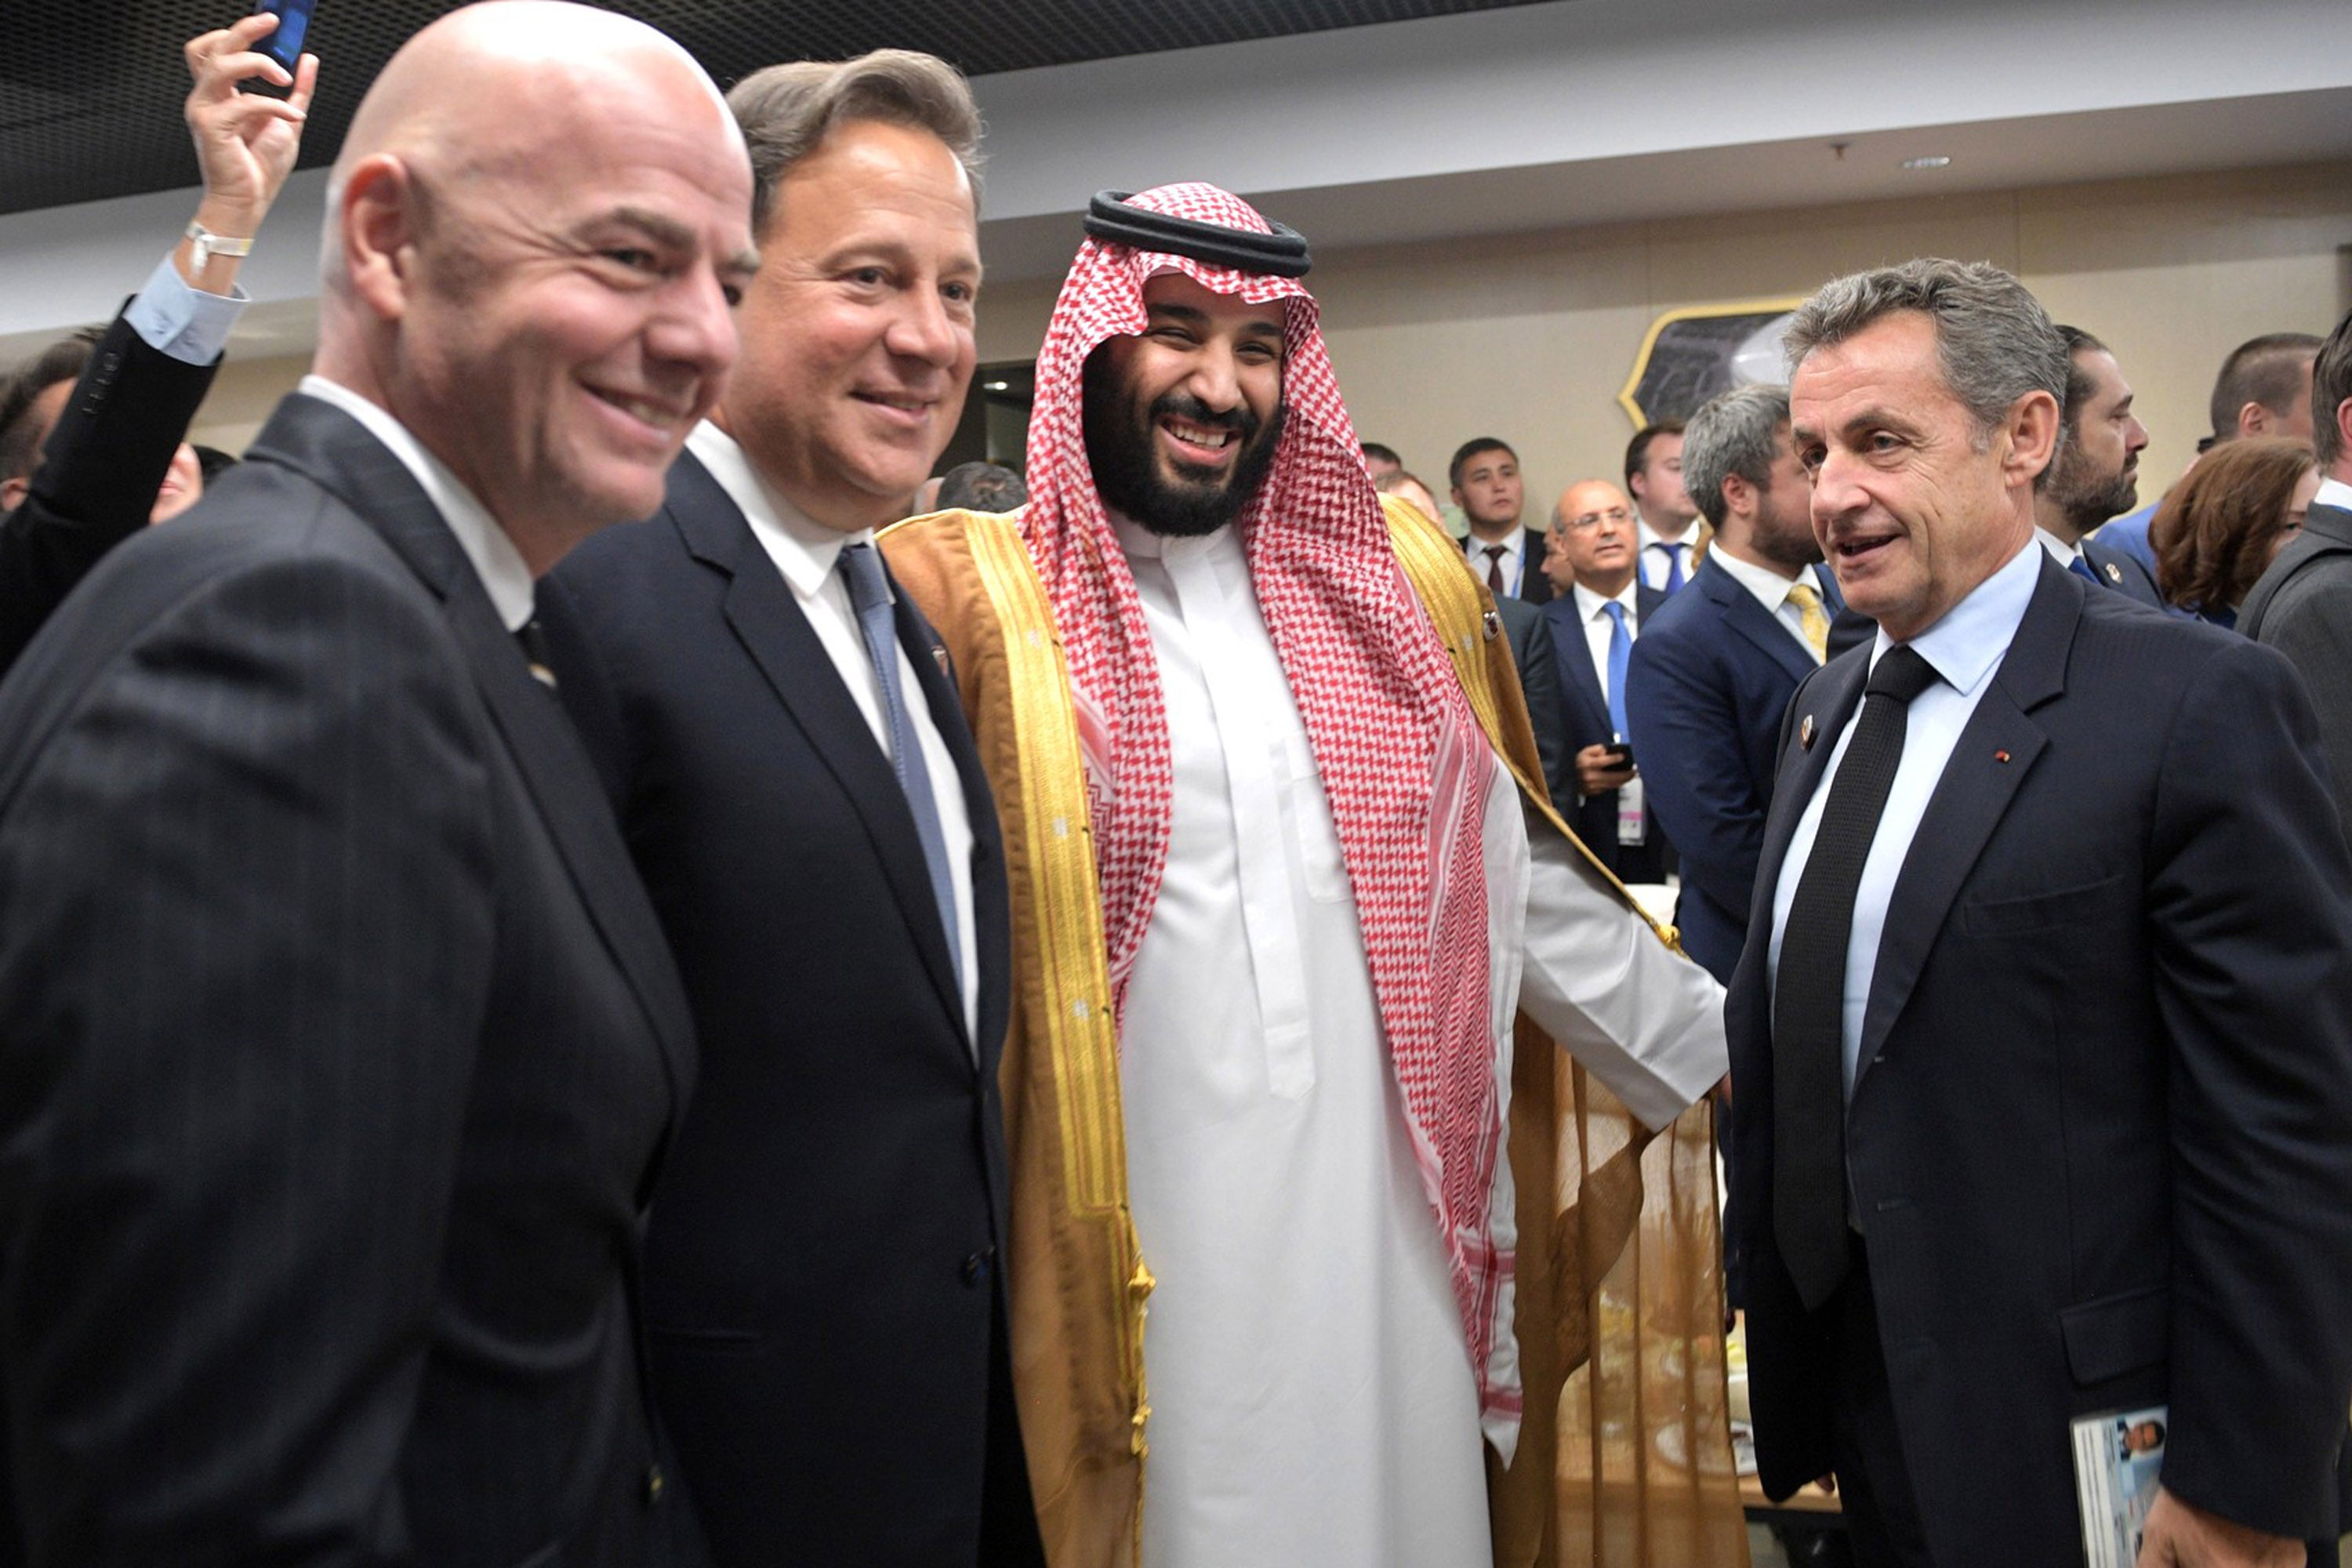 Fifa President Gianni Infantino, left, alongside Saudi Arabia’s Crown Prince Mohammed Bin Salman Al Saud at the 2018 World Cup